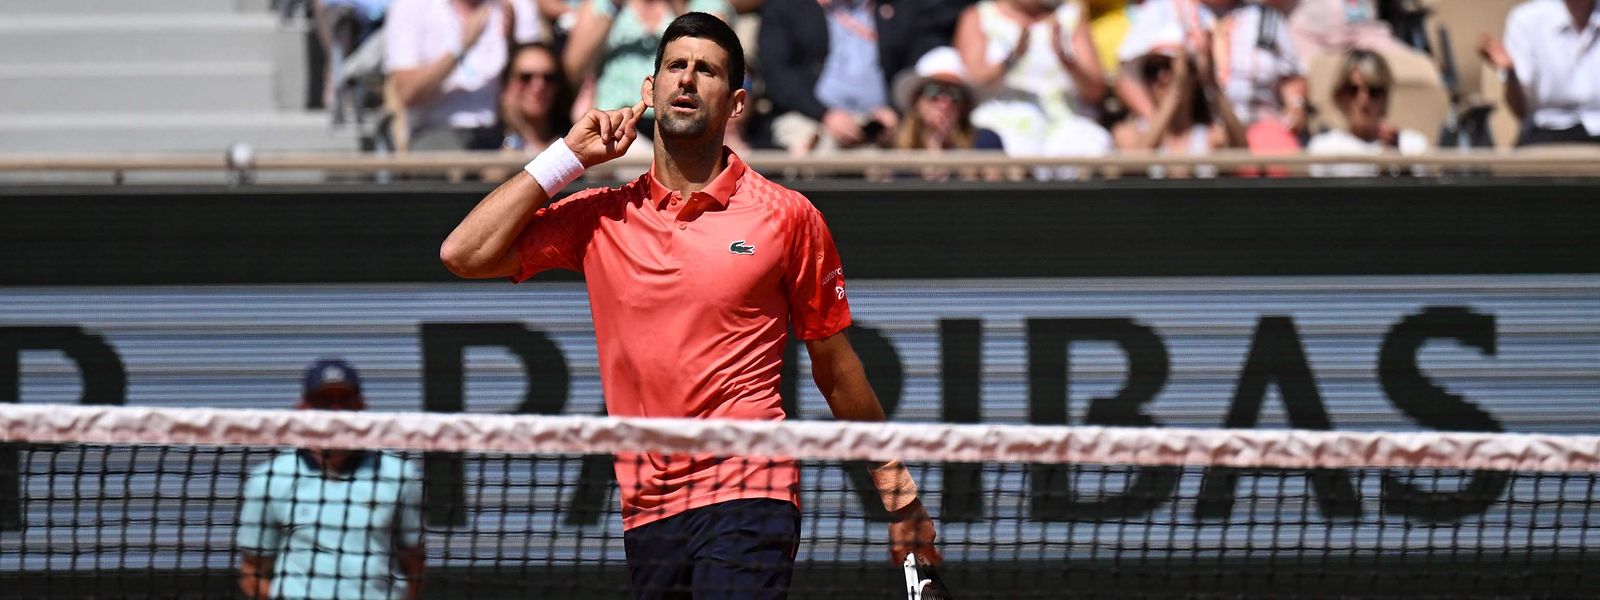 Tennisprofi Novak Djokovic will „keine Debatte anstoßen“.